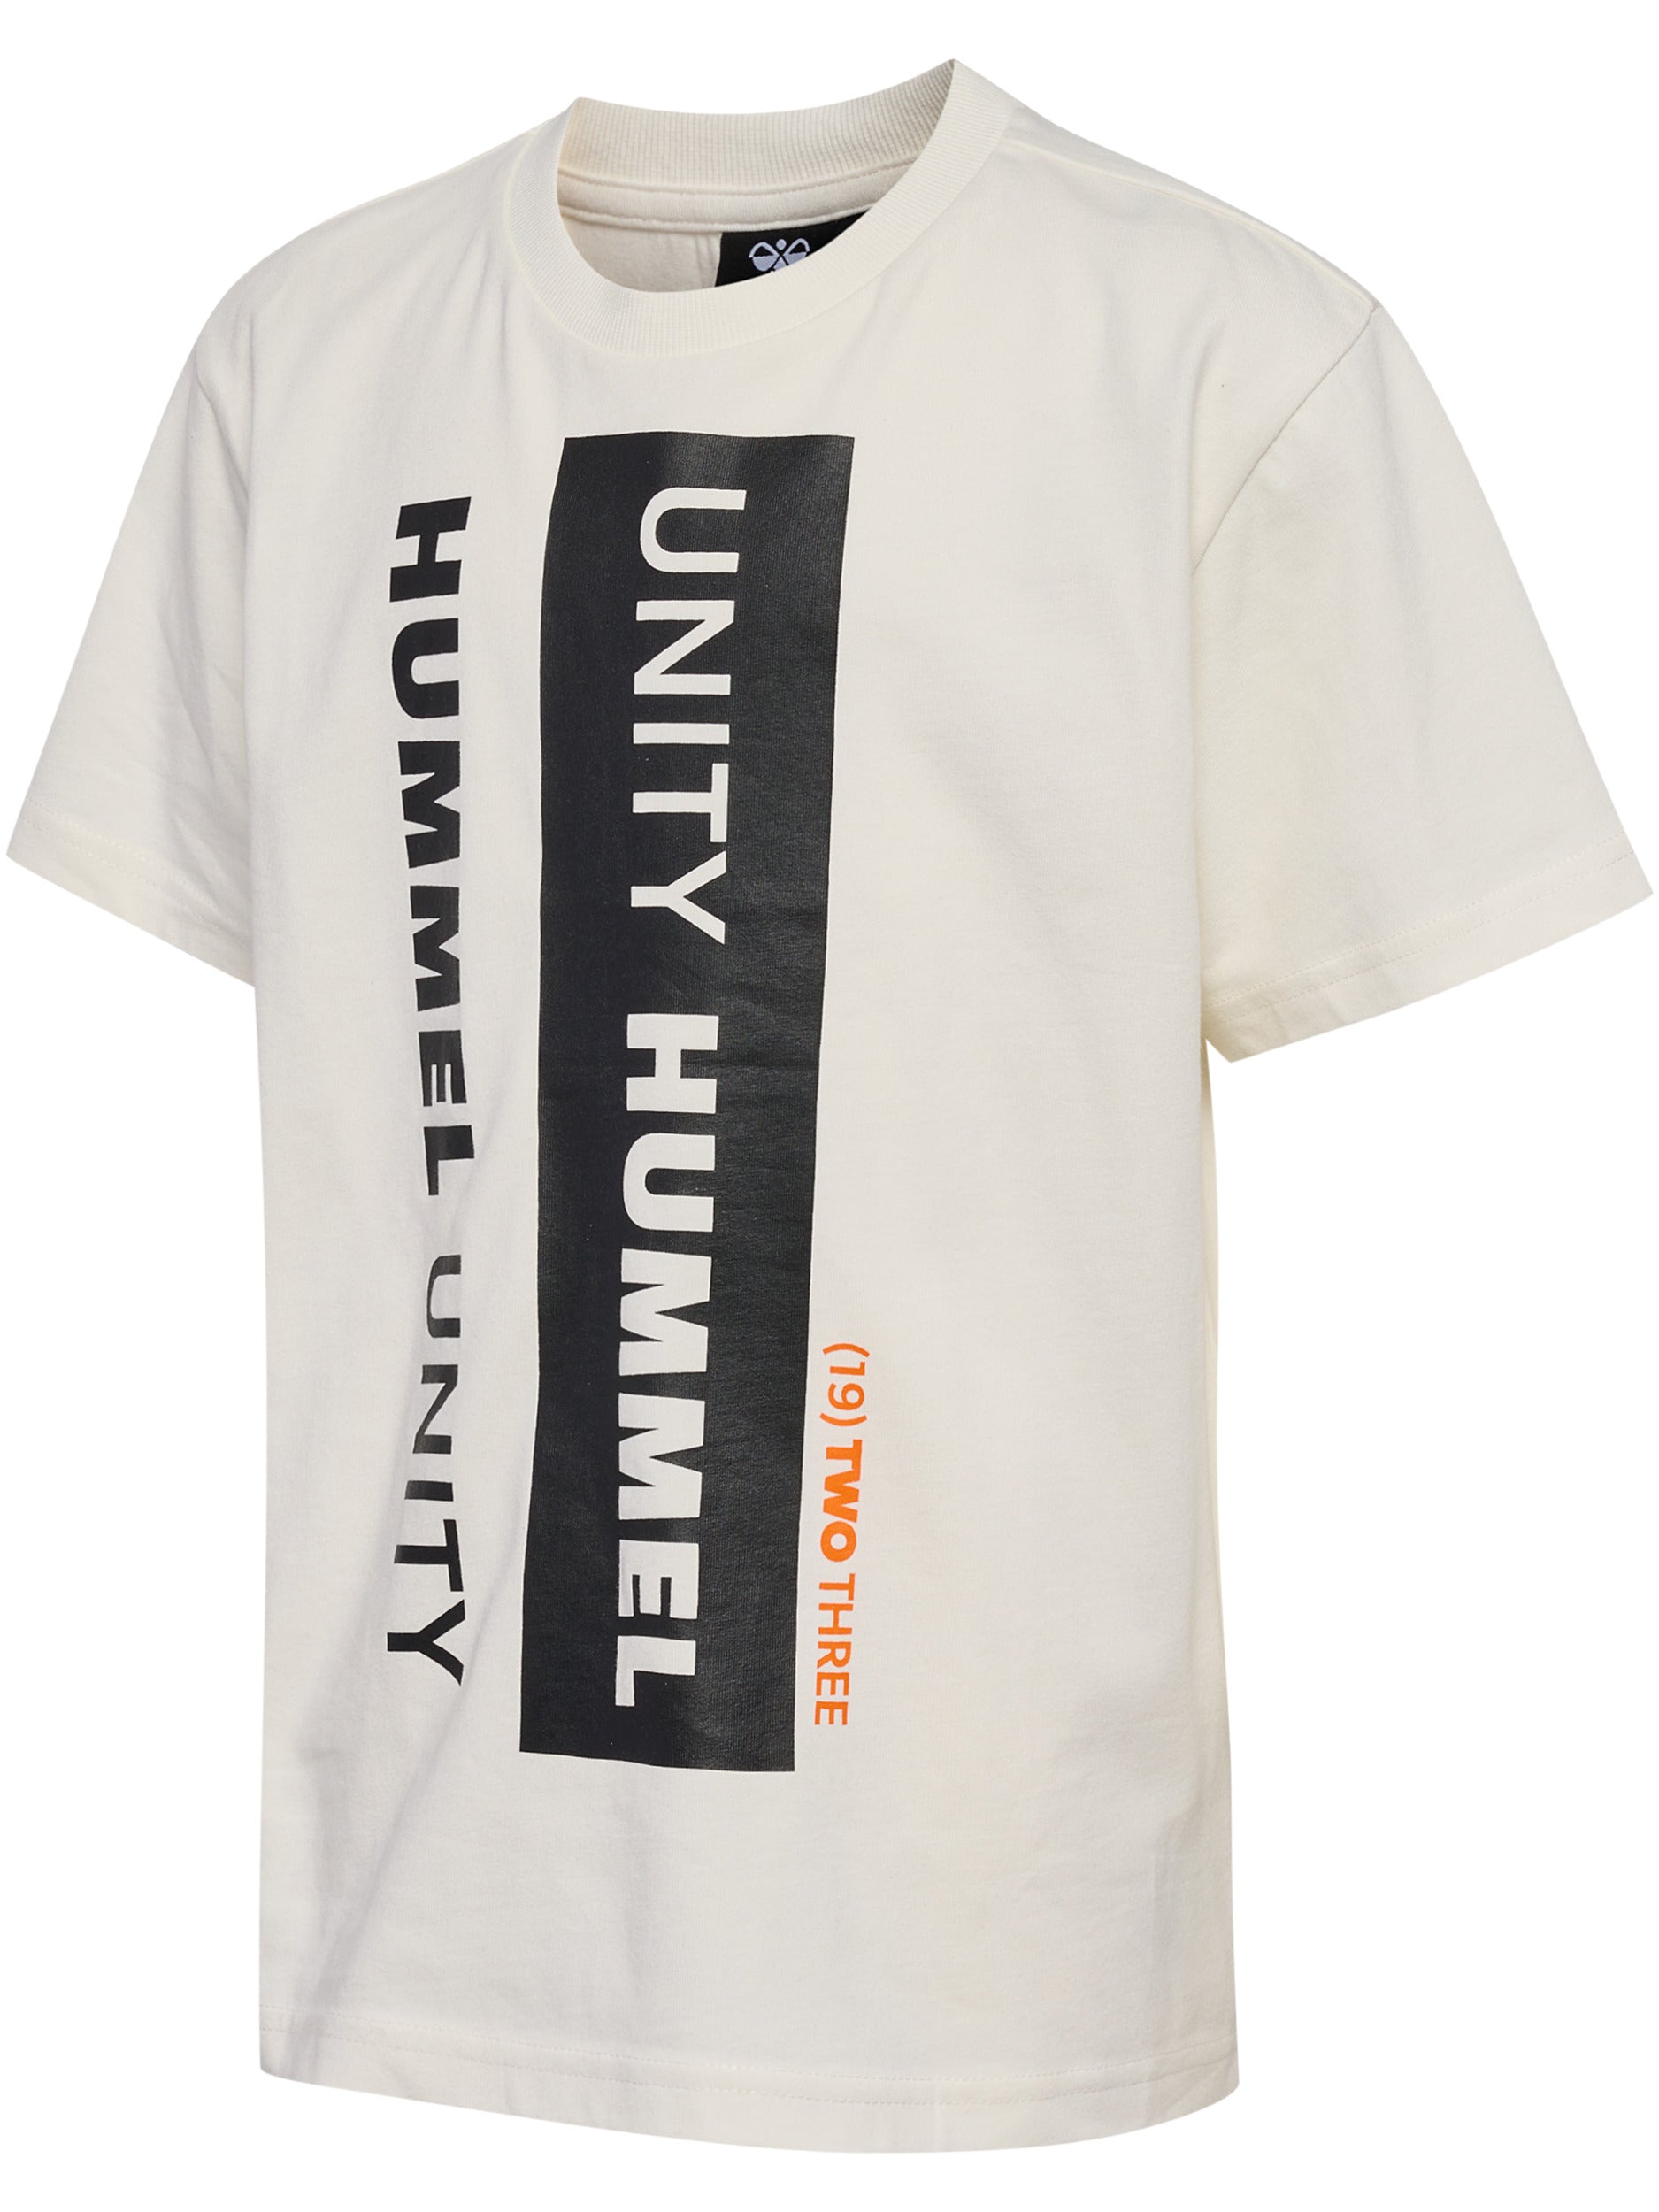 Hummel T-shirt Unity S/S - Hummel - T-shirts - GladeRollinger.dk